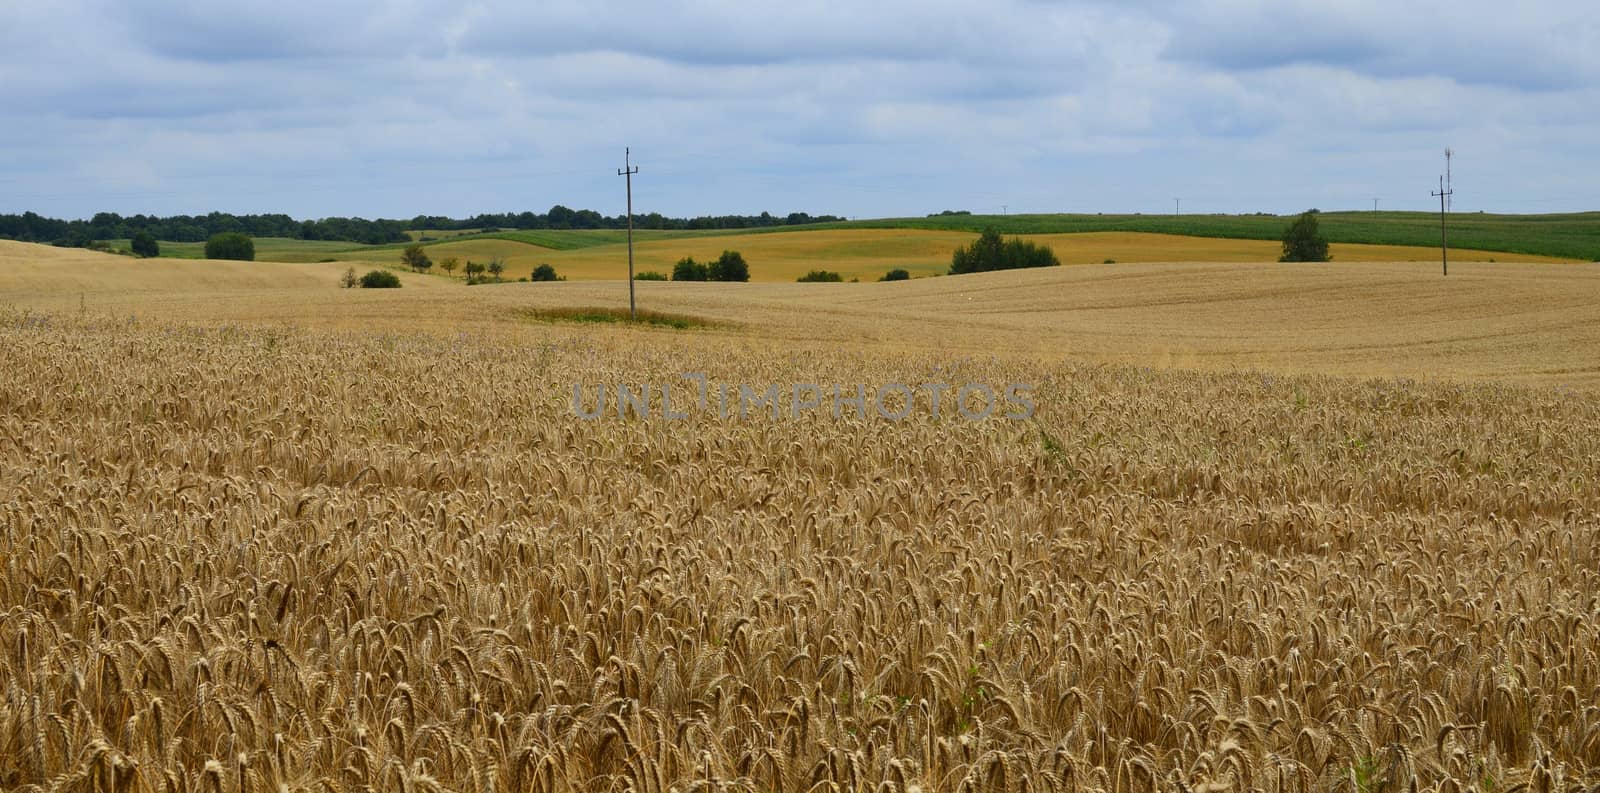 Grain and Corn Fields Background by fstockluk